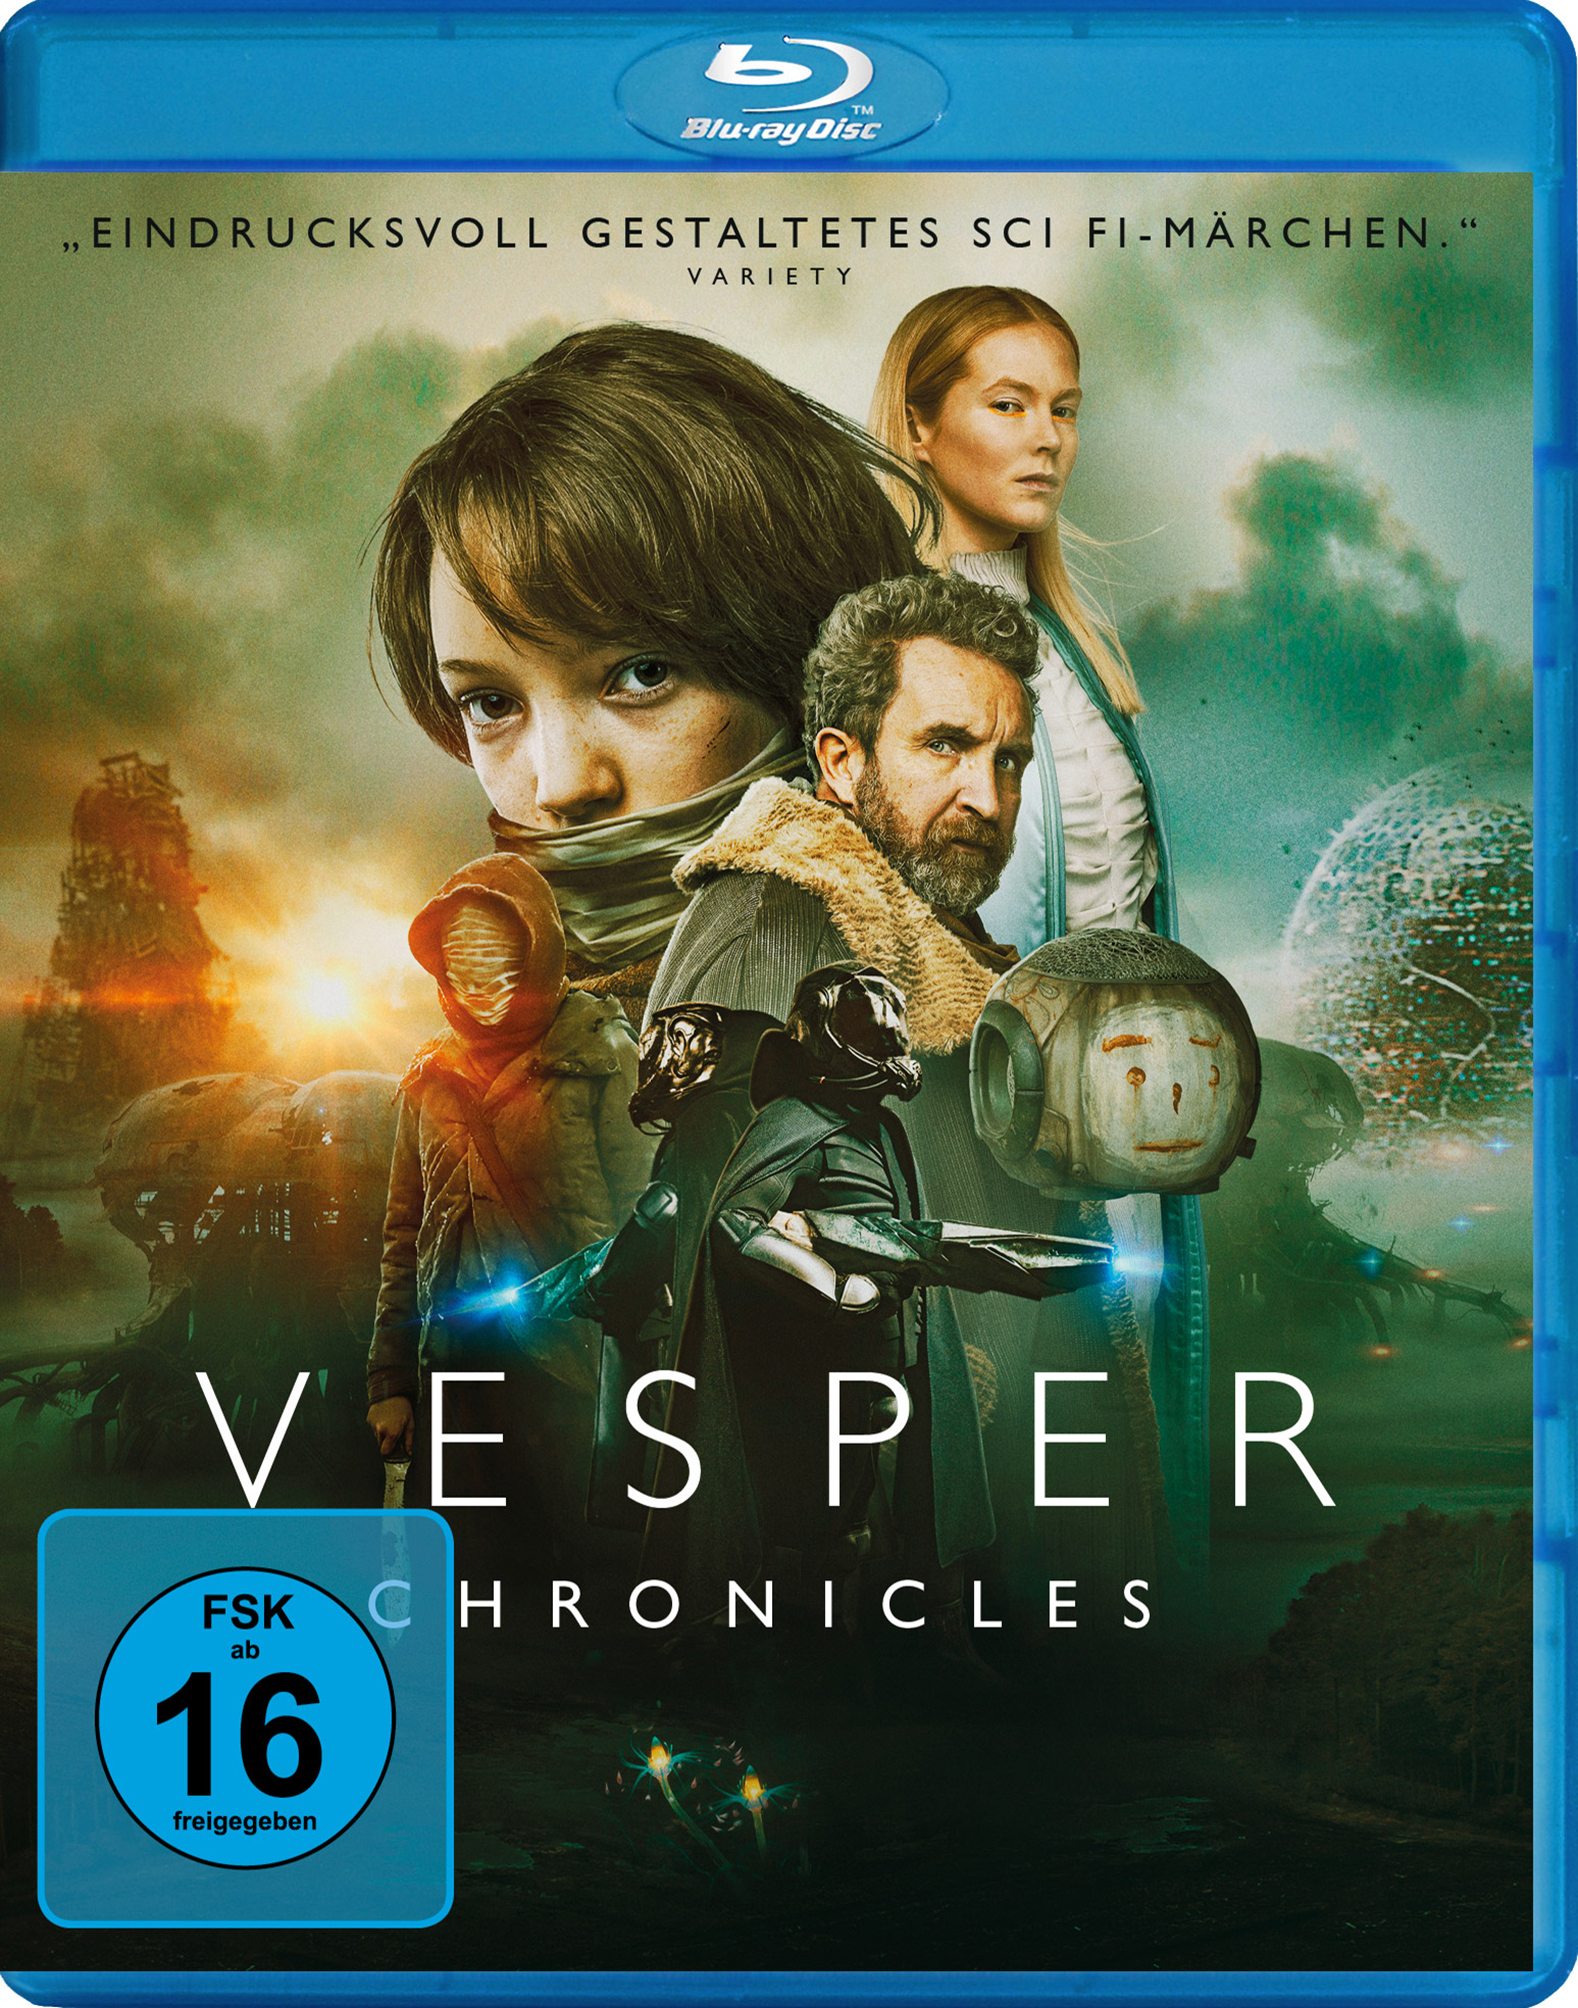 Vesper Chronicles (Blu-ray)  Cover